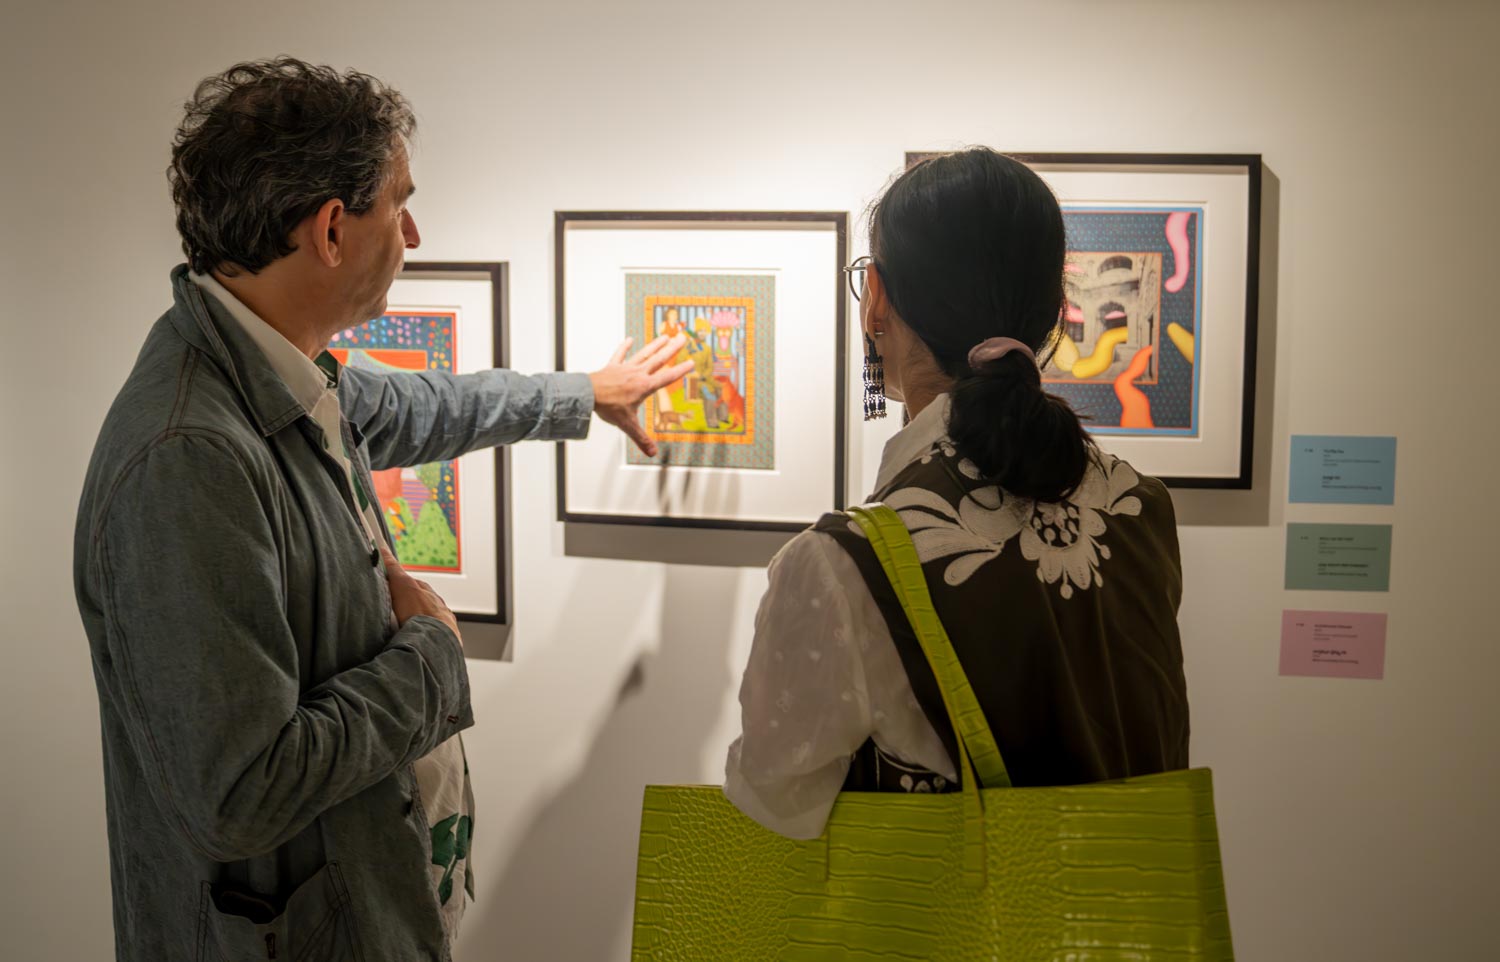 A person explains an artwork hung on a wall to an onlooker.